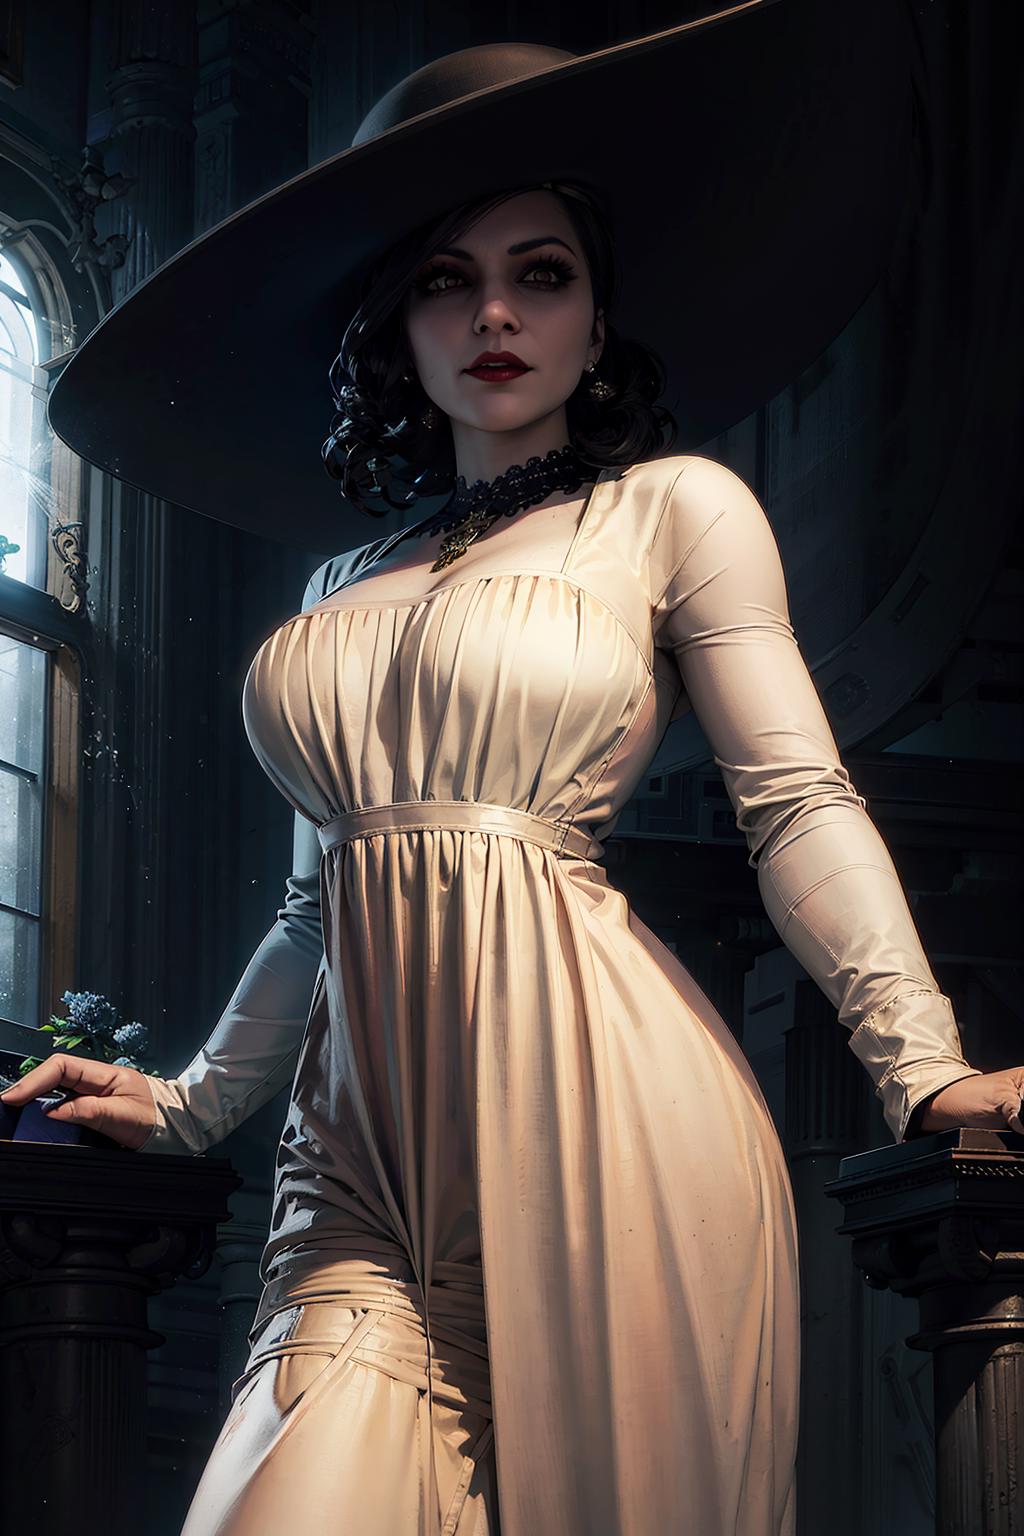 SXZ Lady Dimitrescu - Helena Mankowska [ Resident Evil ] image by sadxzero